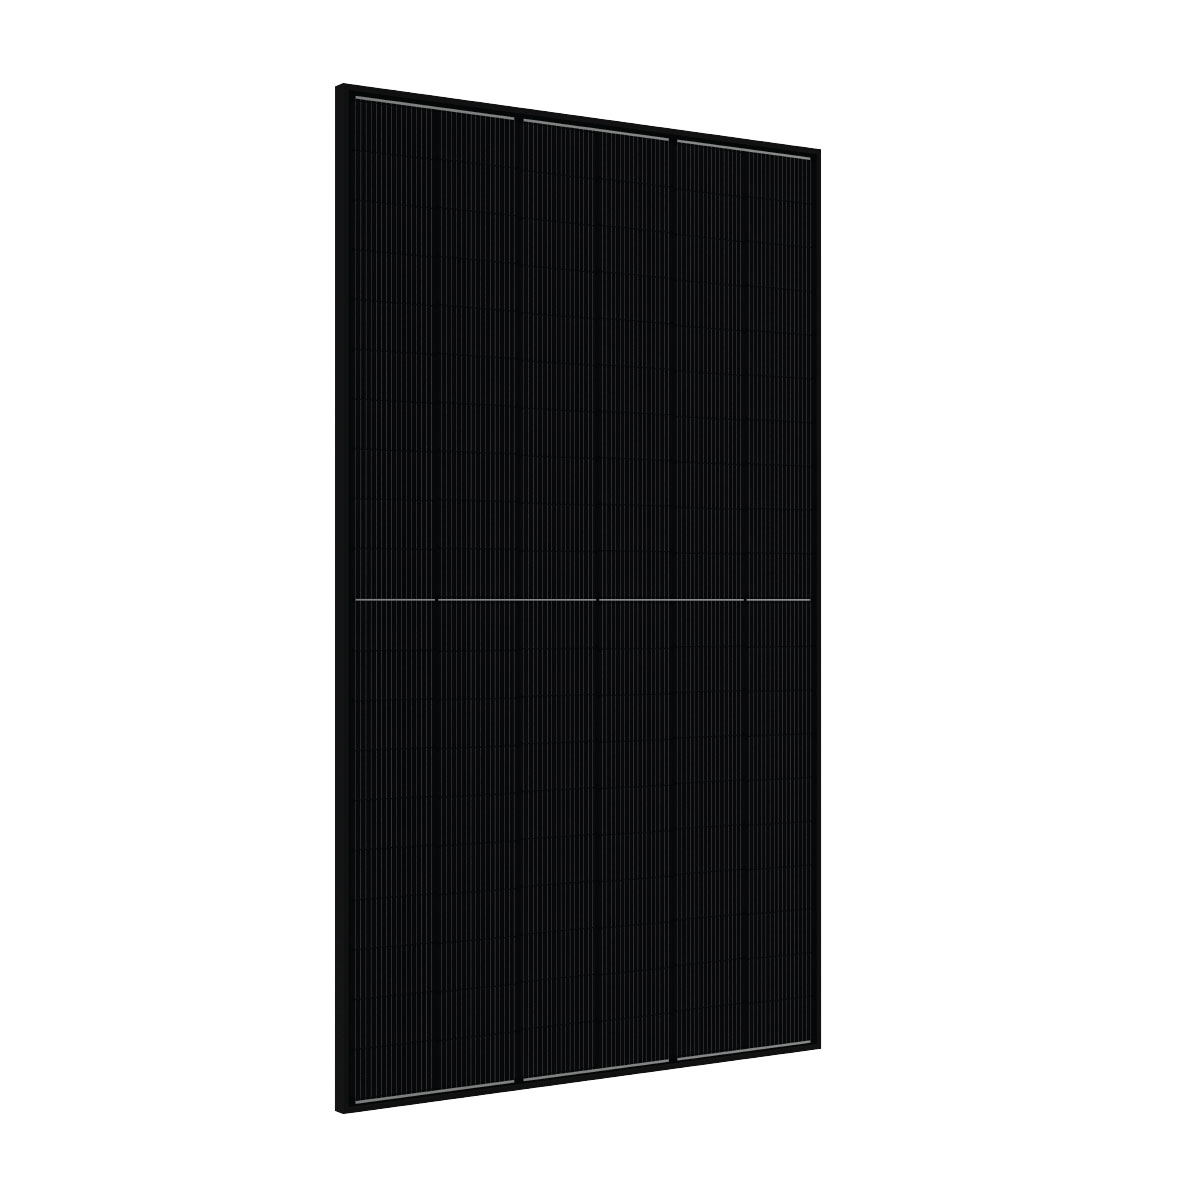 TommaTech 415Wp 108TN M10 TopCon Dark Series Solar Panel